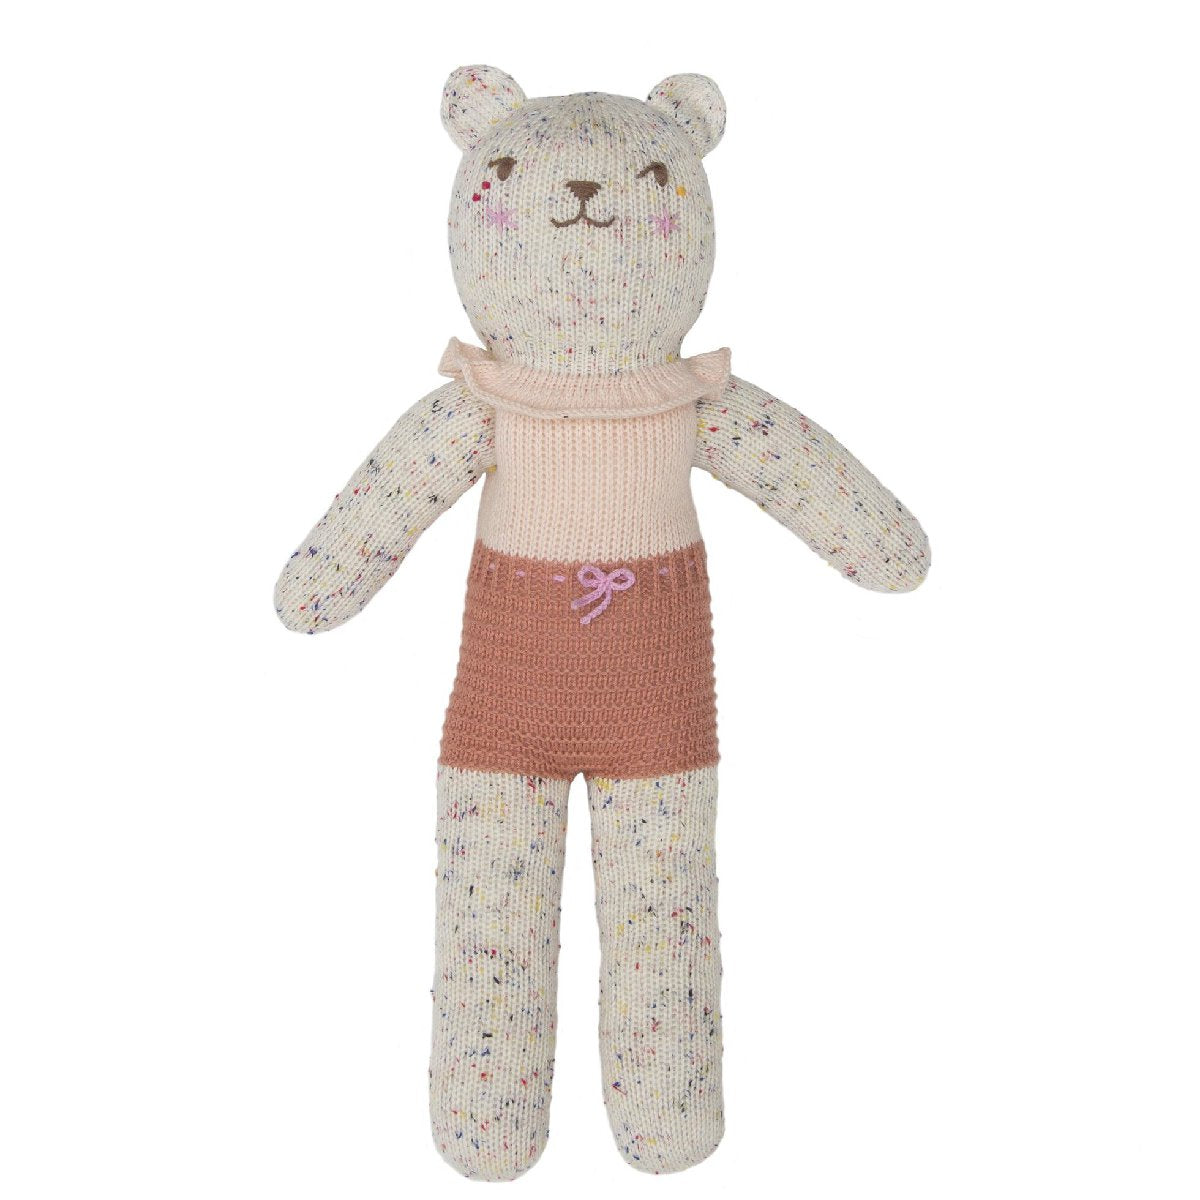 Blabla | "Grenadine" tweedy bear kids cotton doll